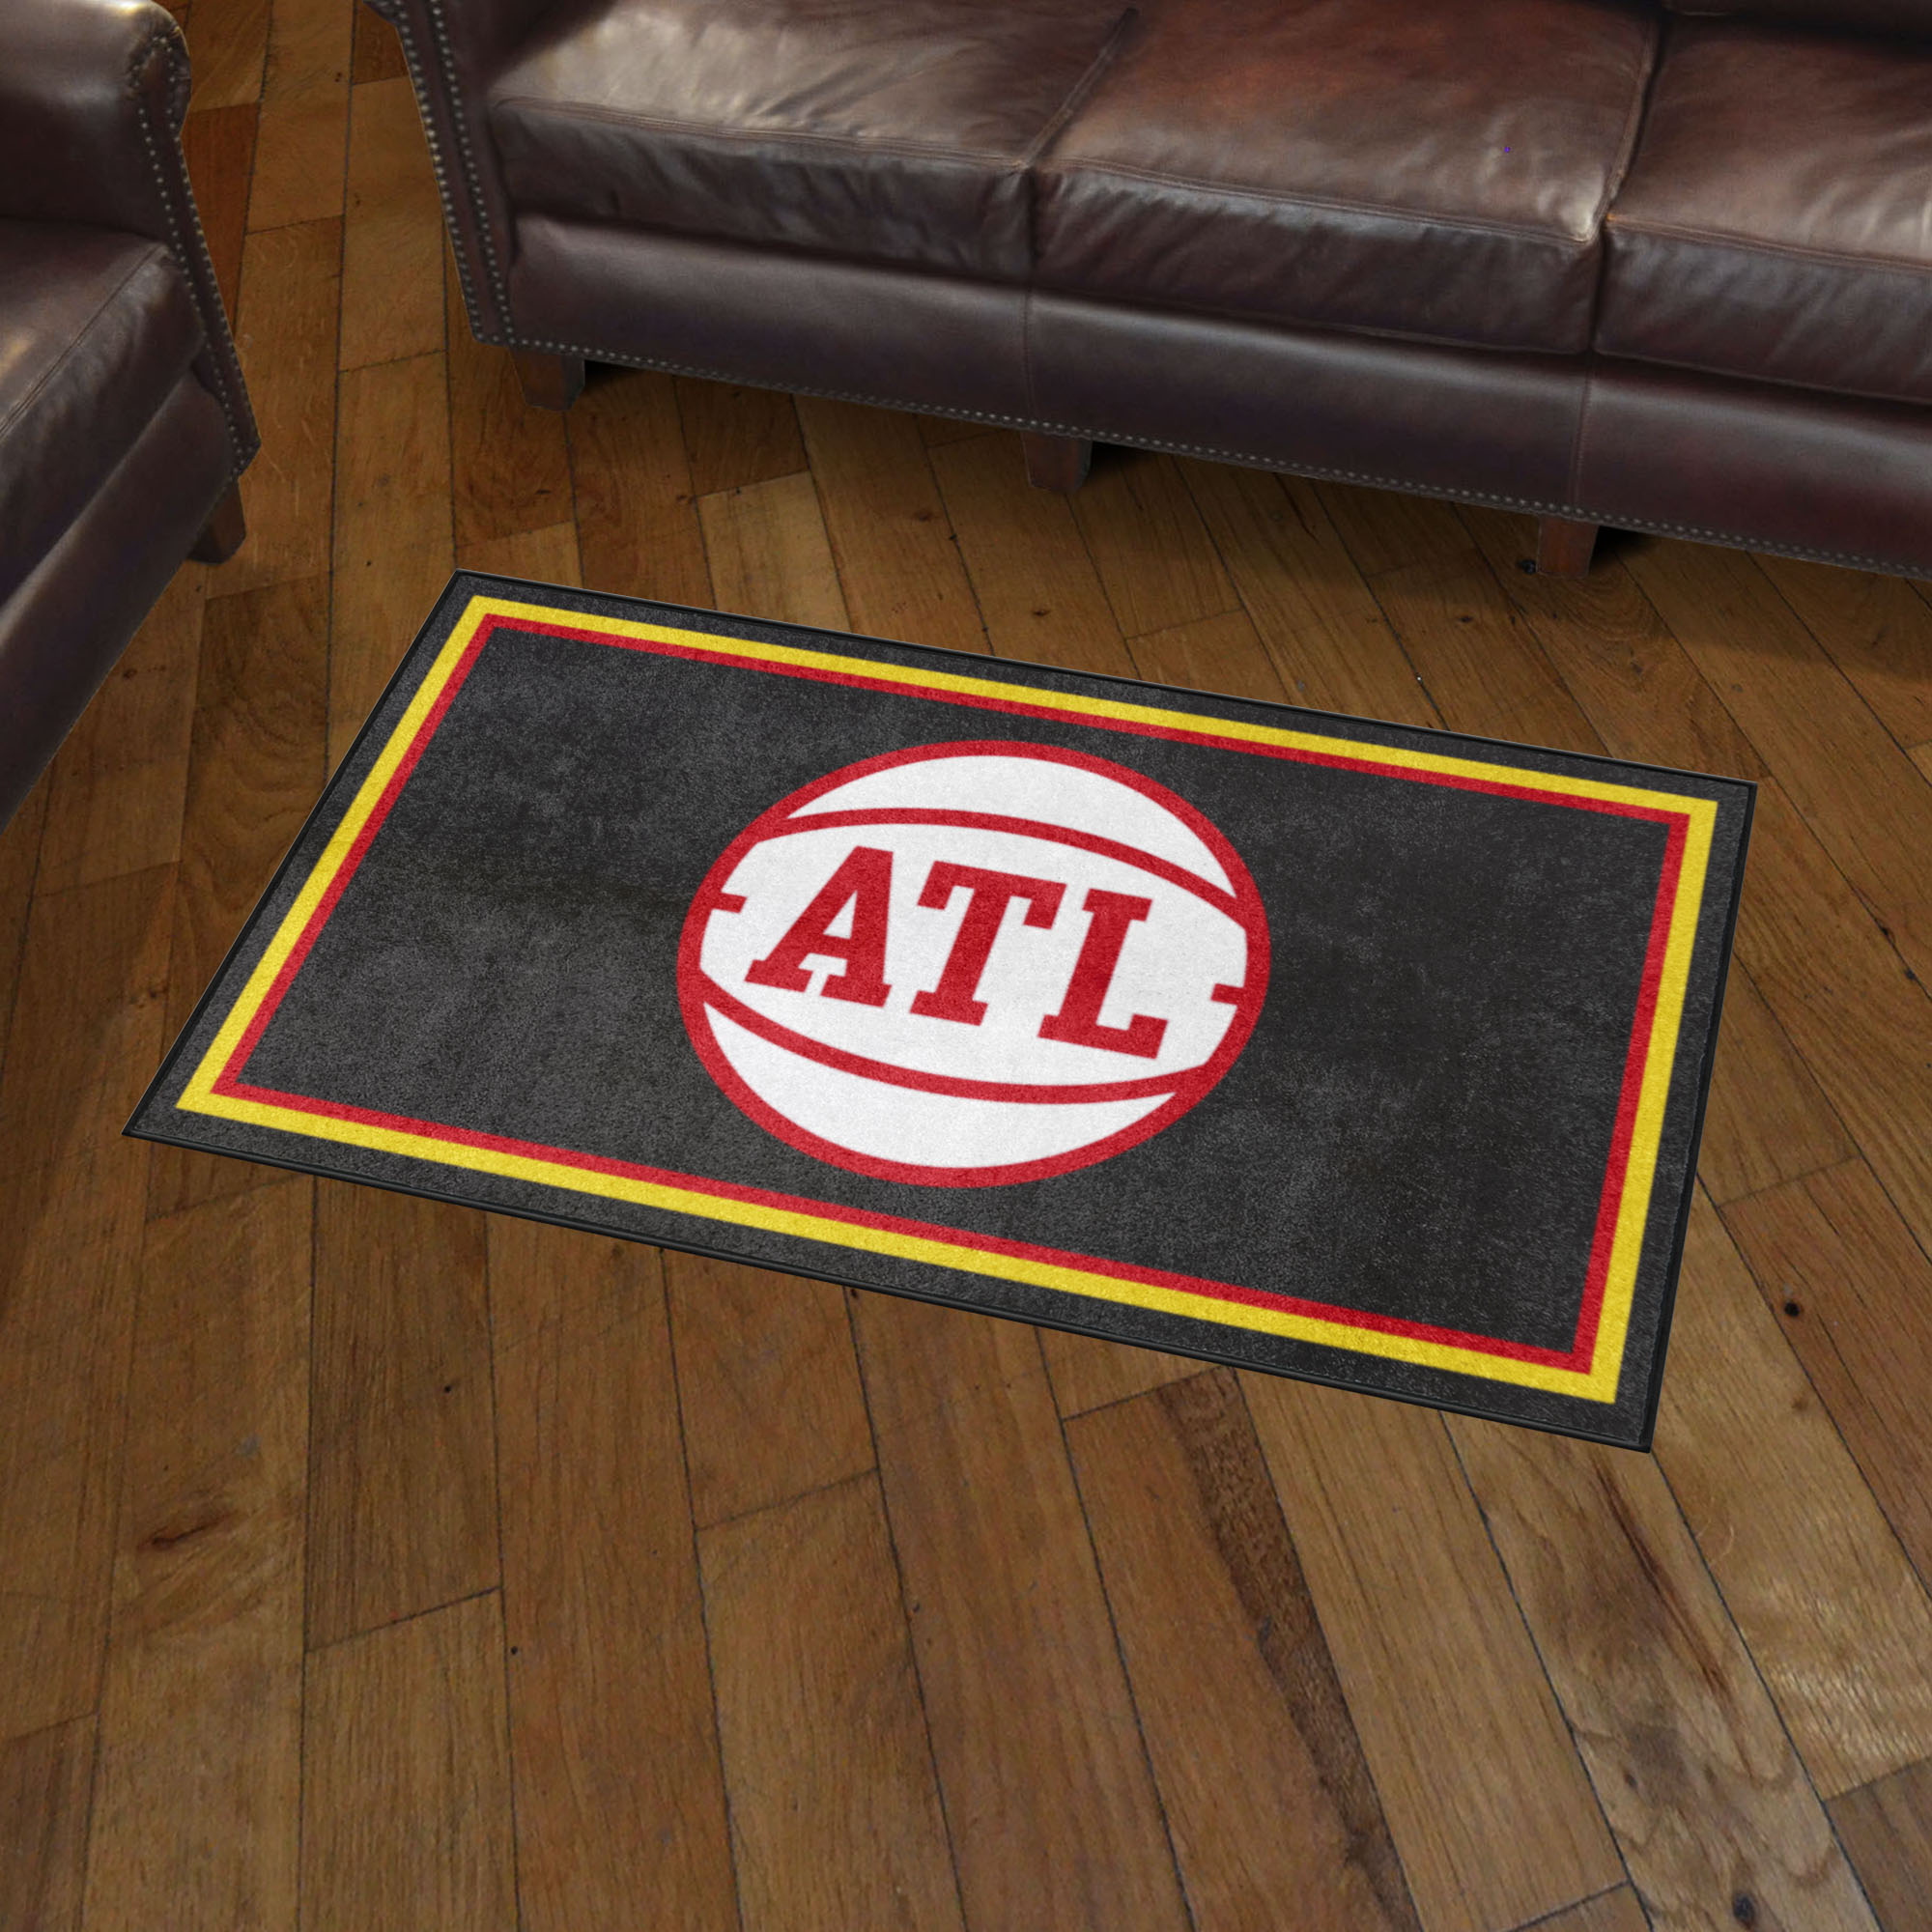 Atlanta Hawks Area Rug - 3' x 5' Alt Logo Nylon